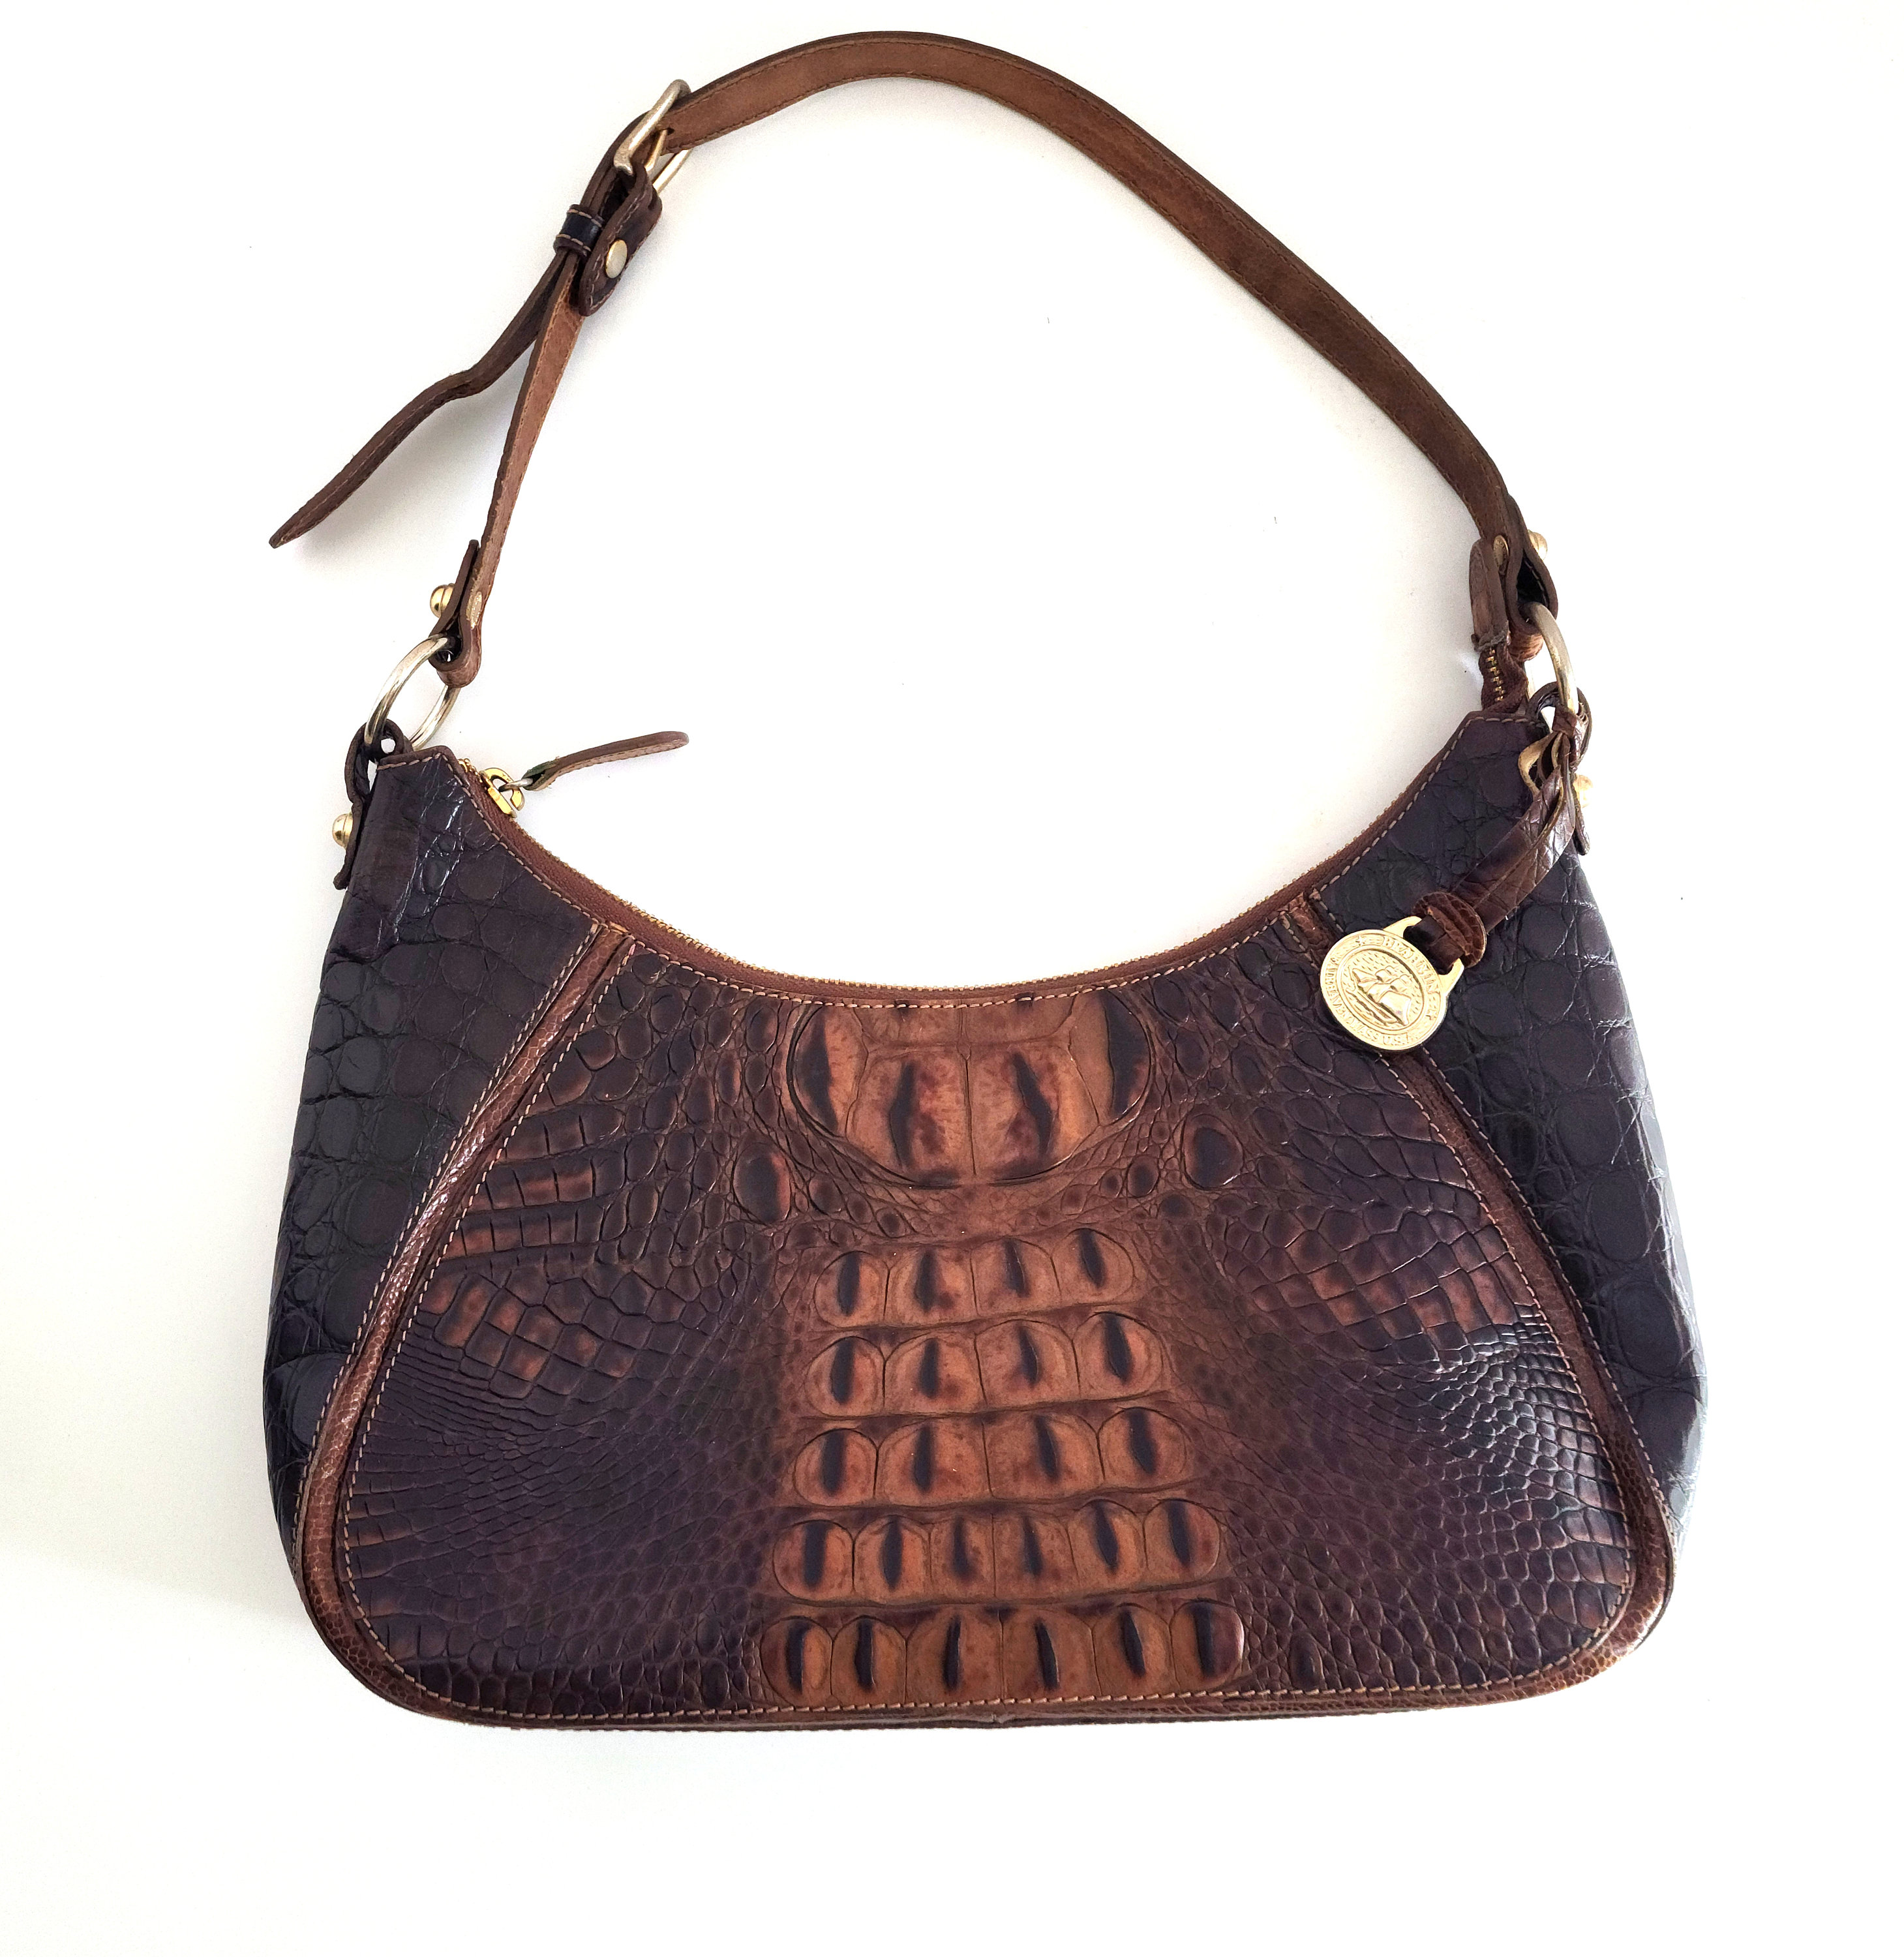 Brahmin - Authenticated Handbag - Leather Blue for Women, Never Worn